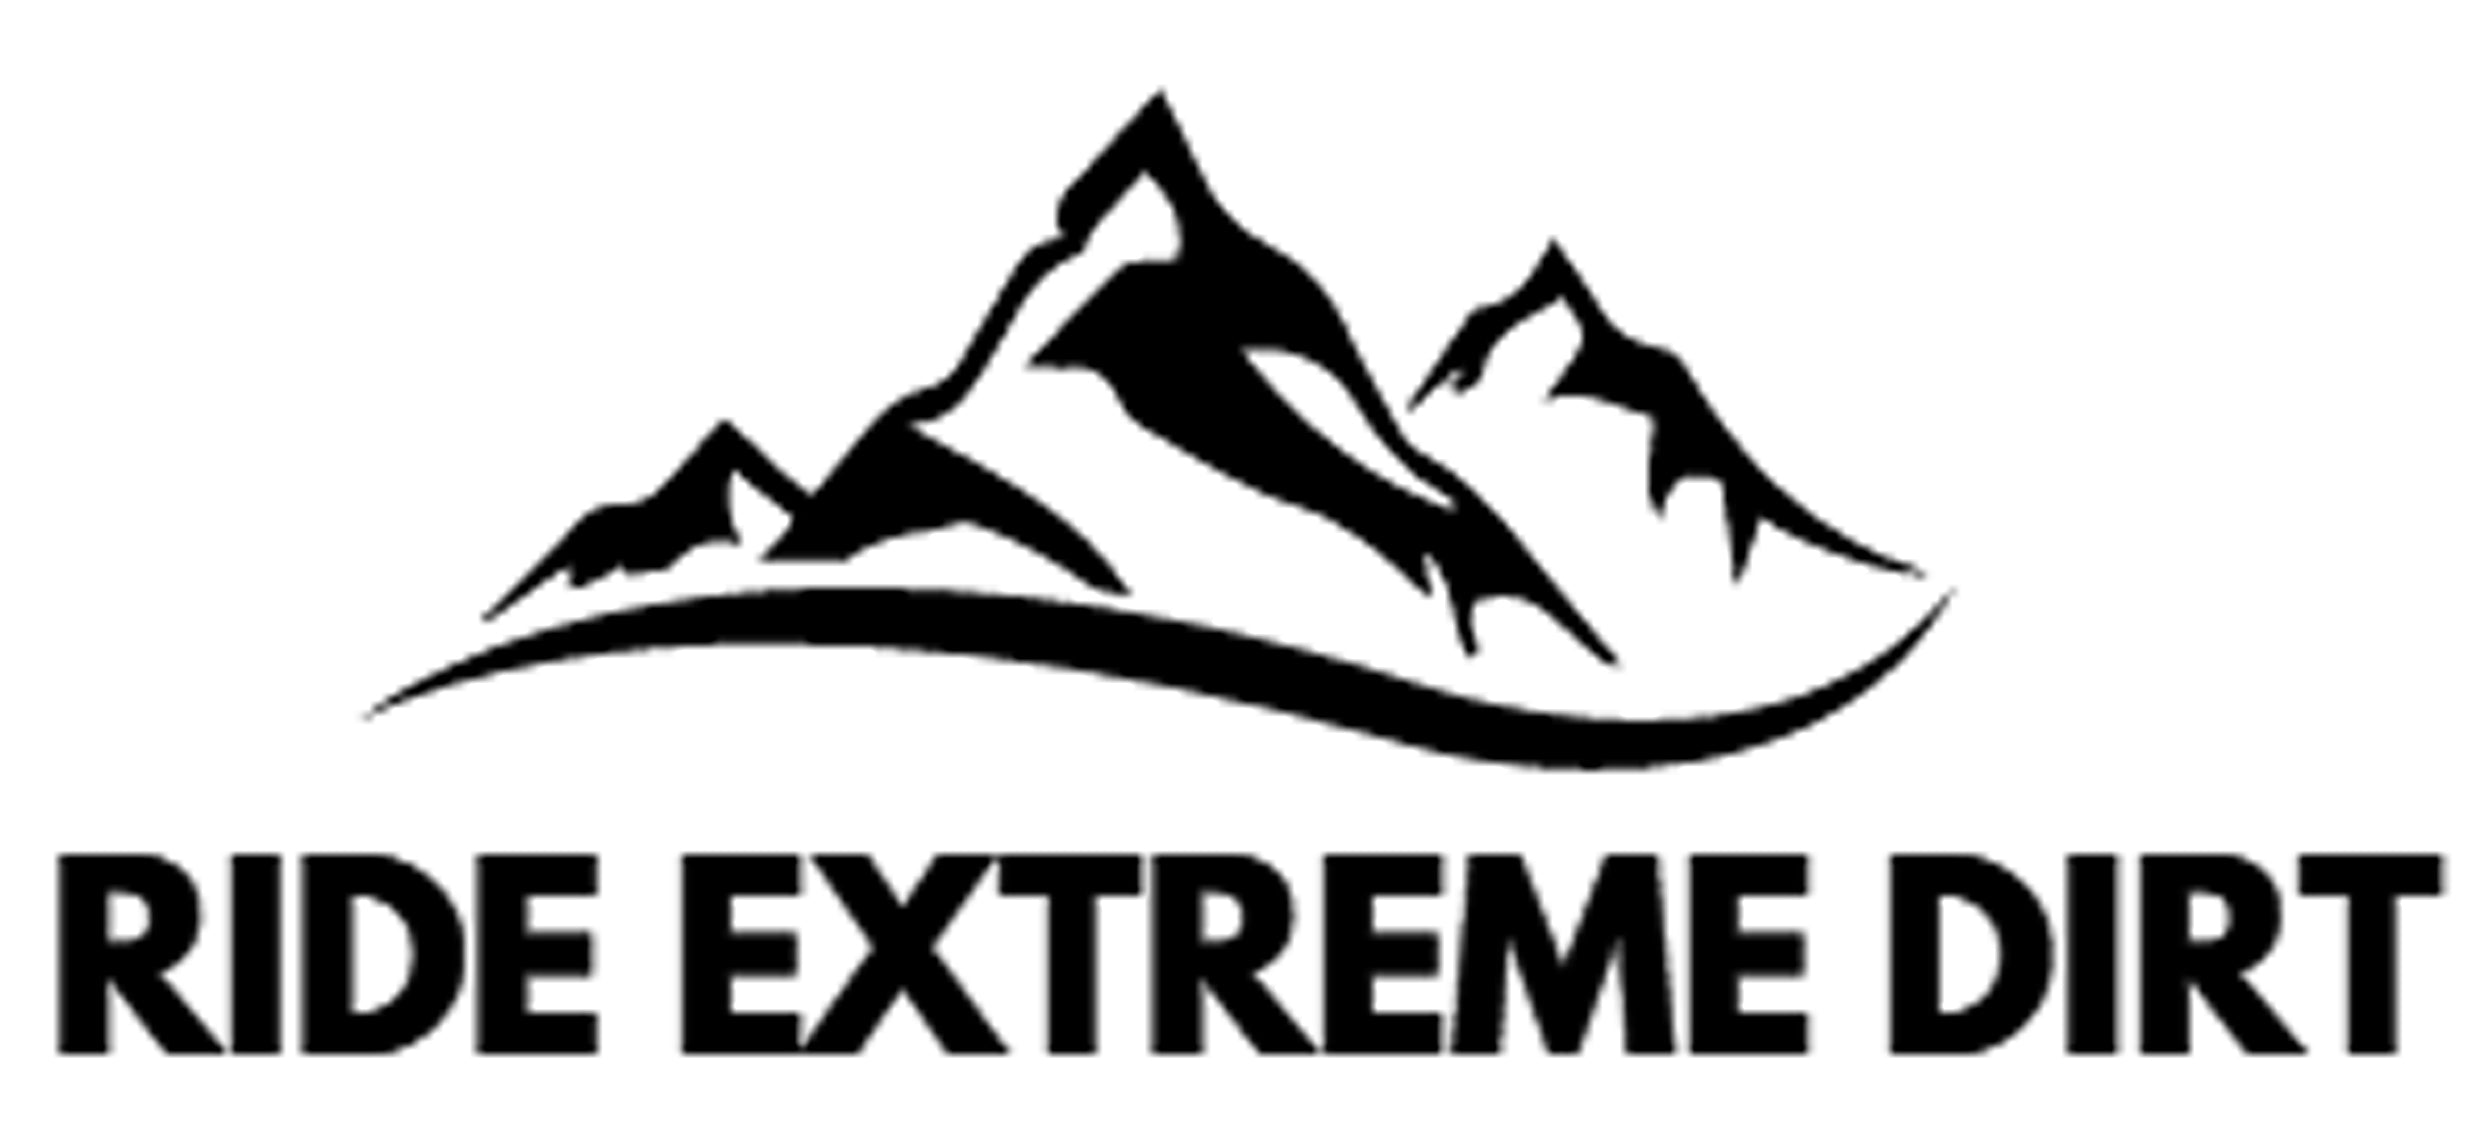 Ride extreme dirt logo